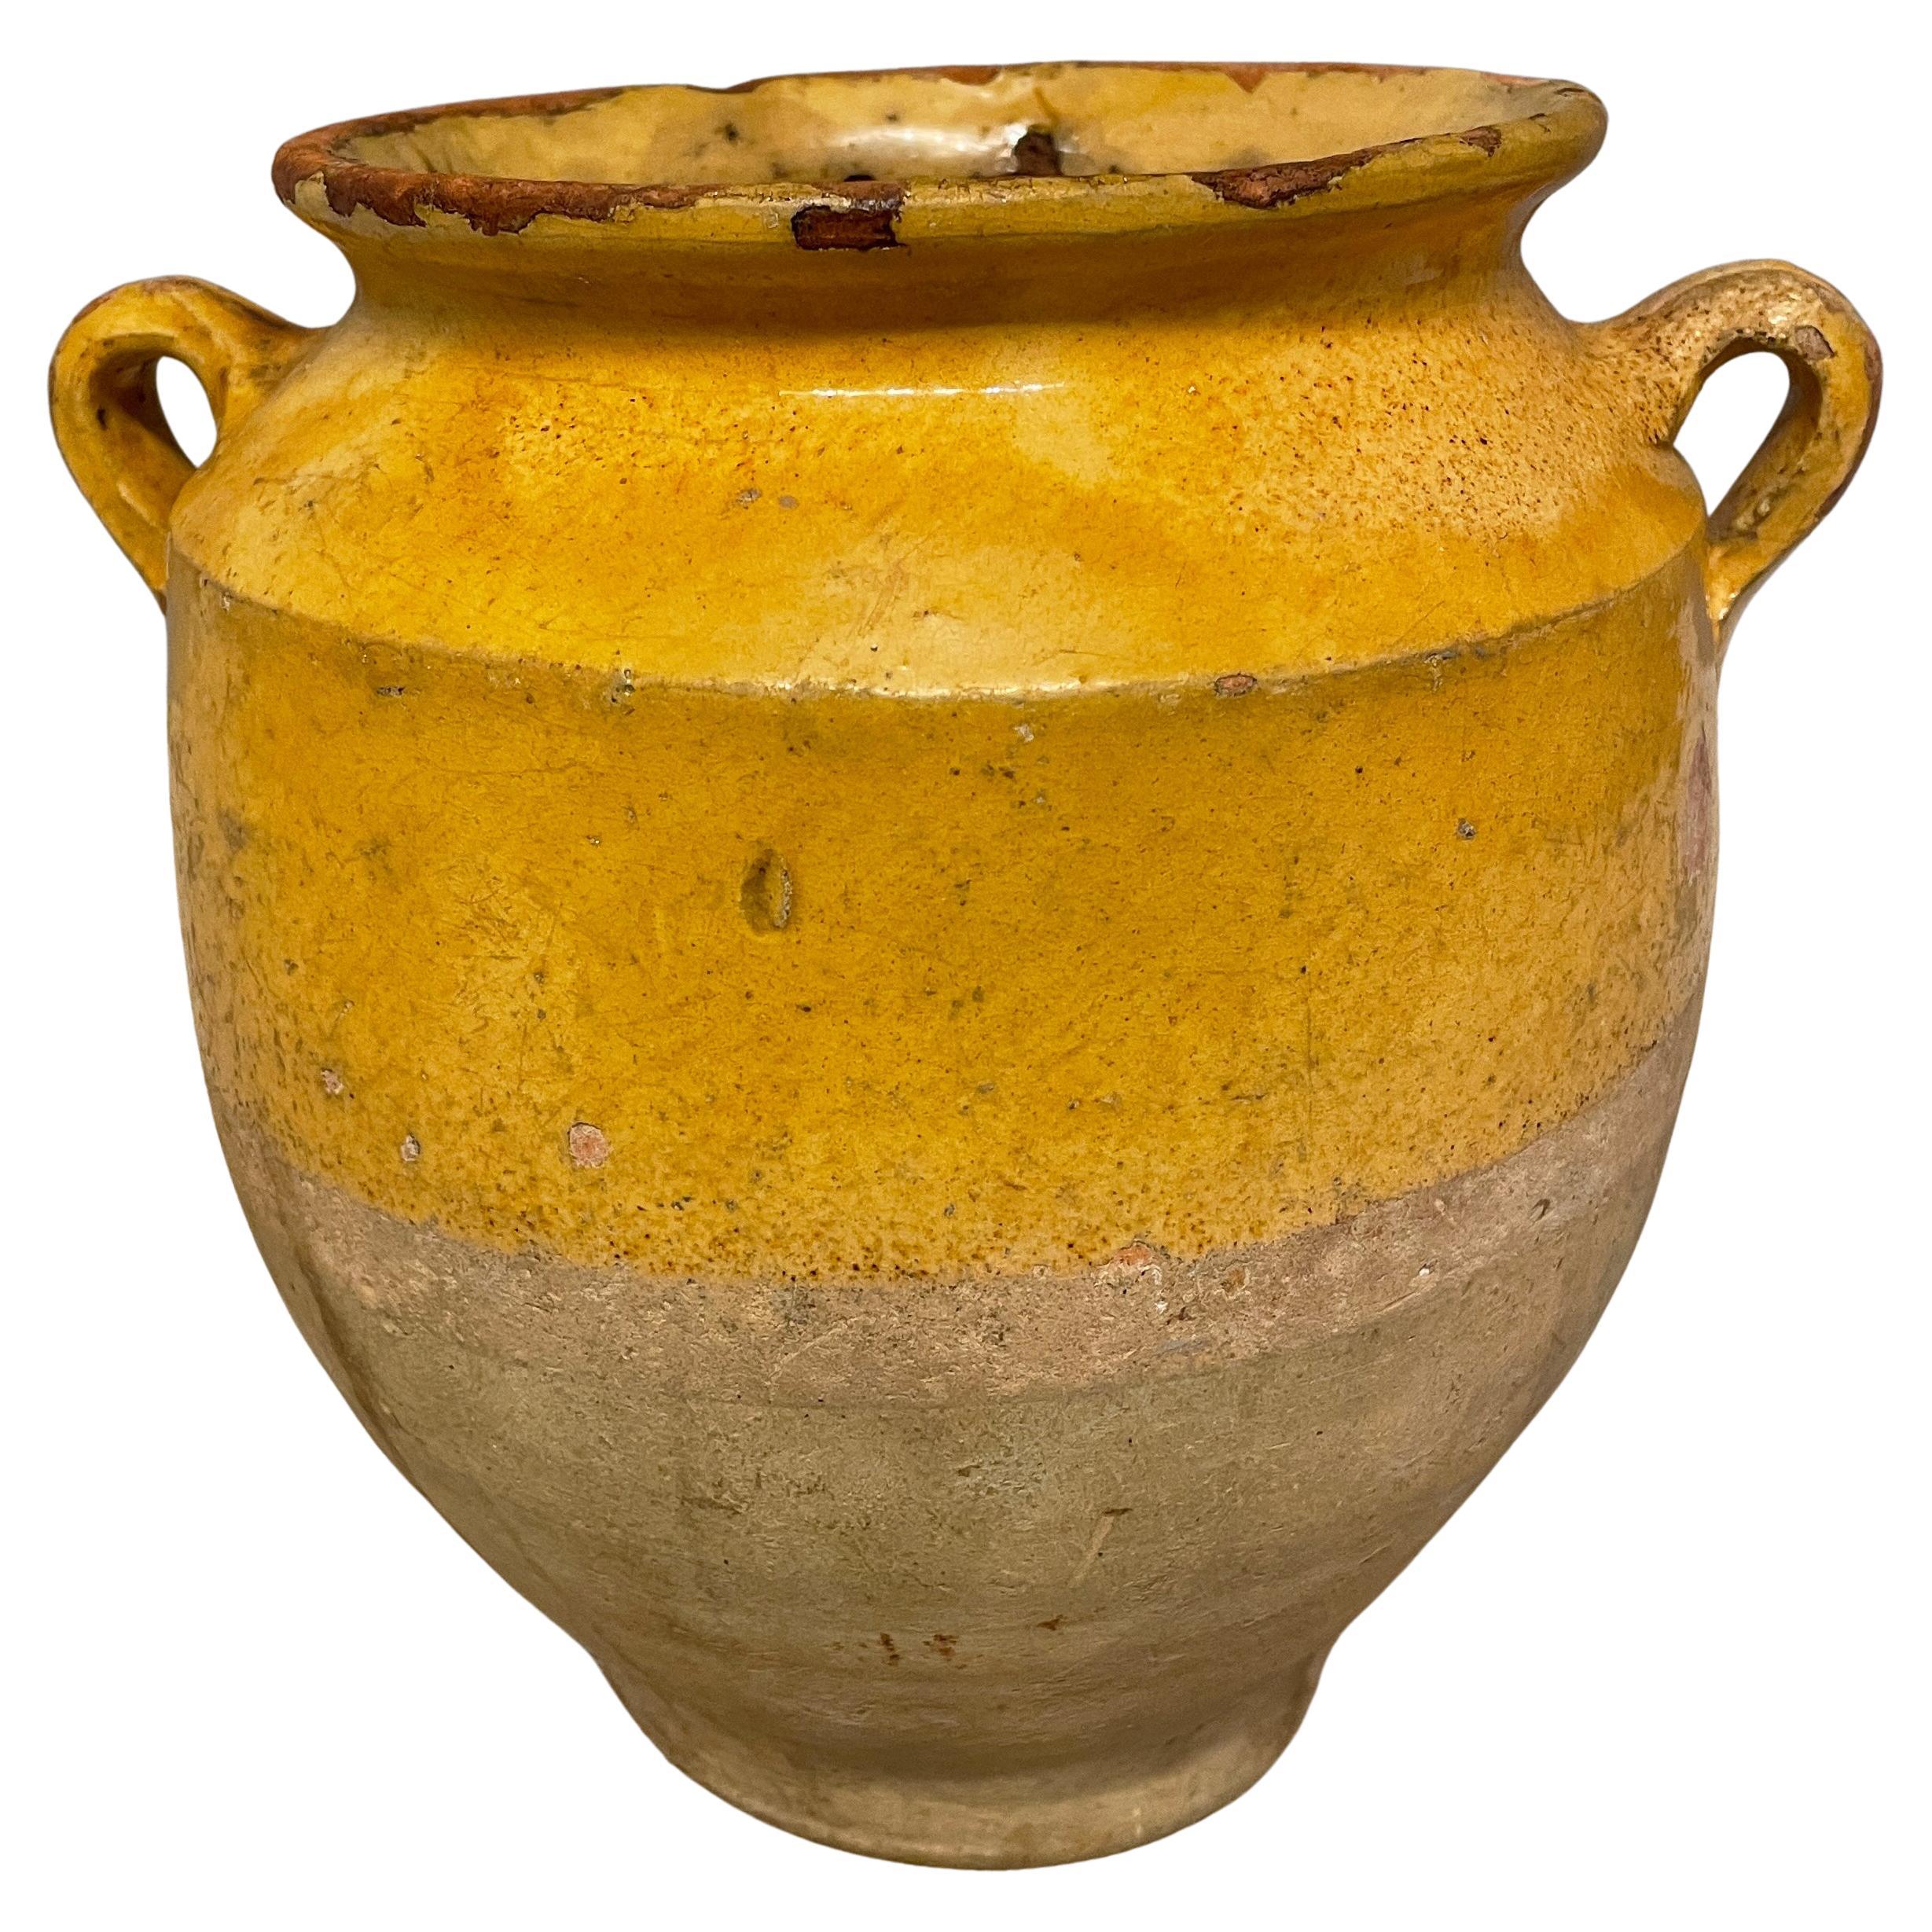 19th C. French Terracotta Confit Pot